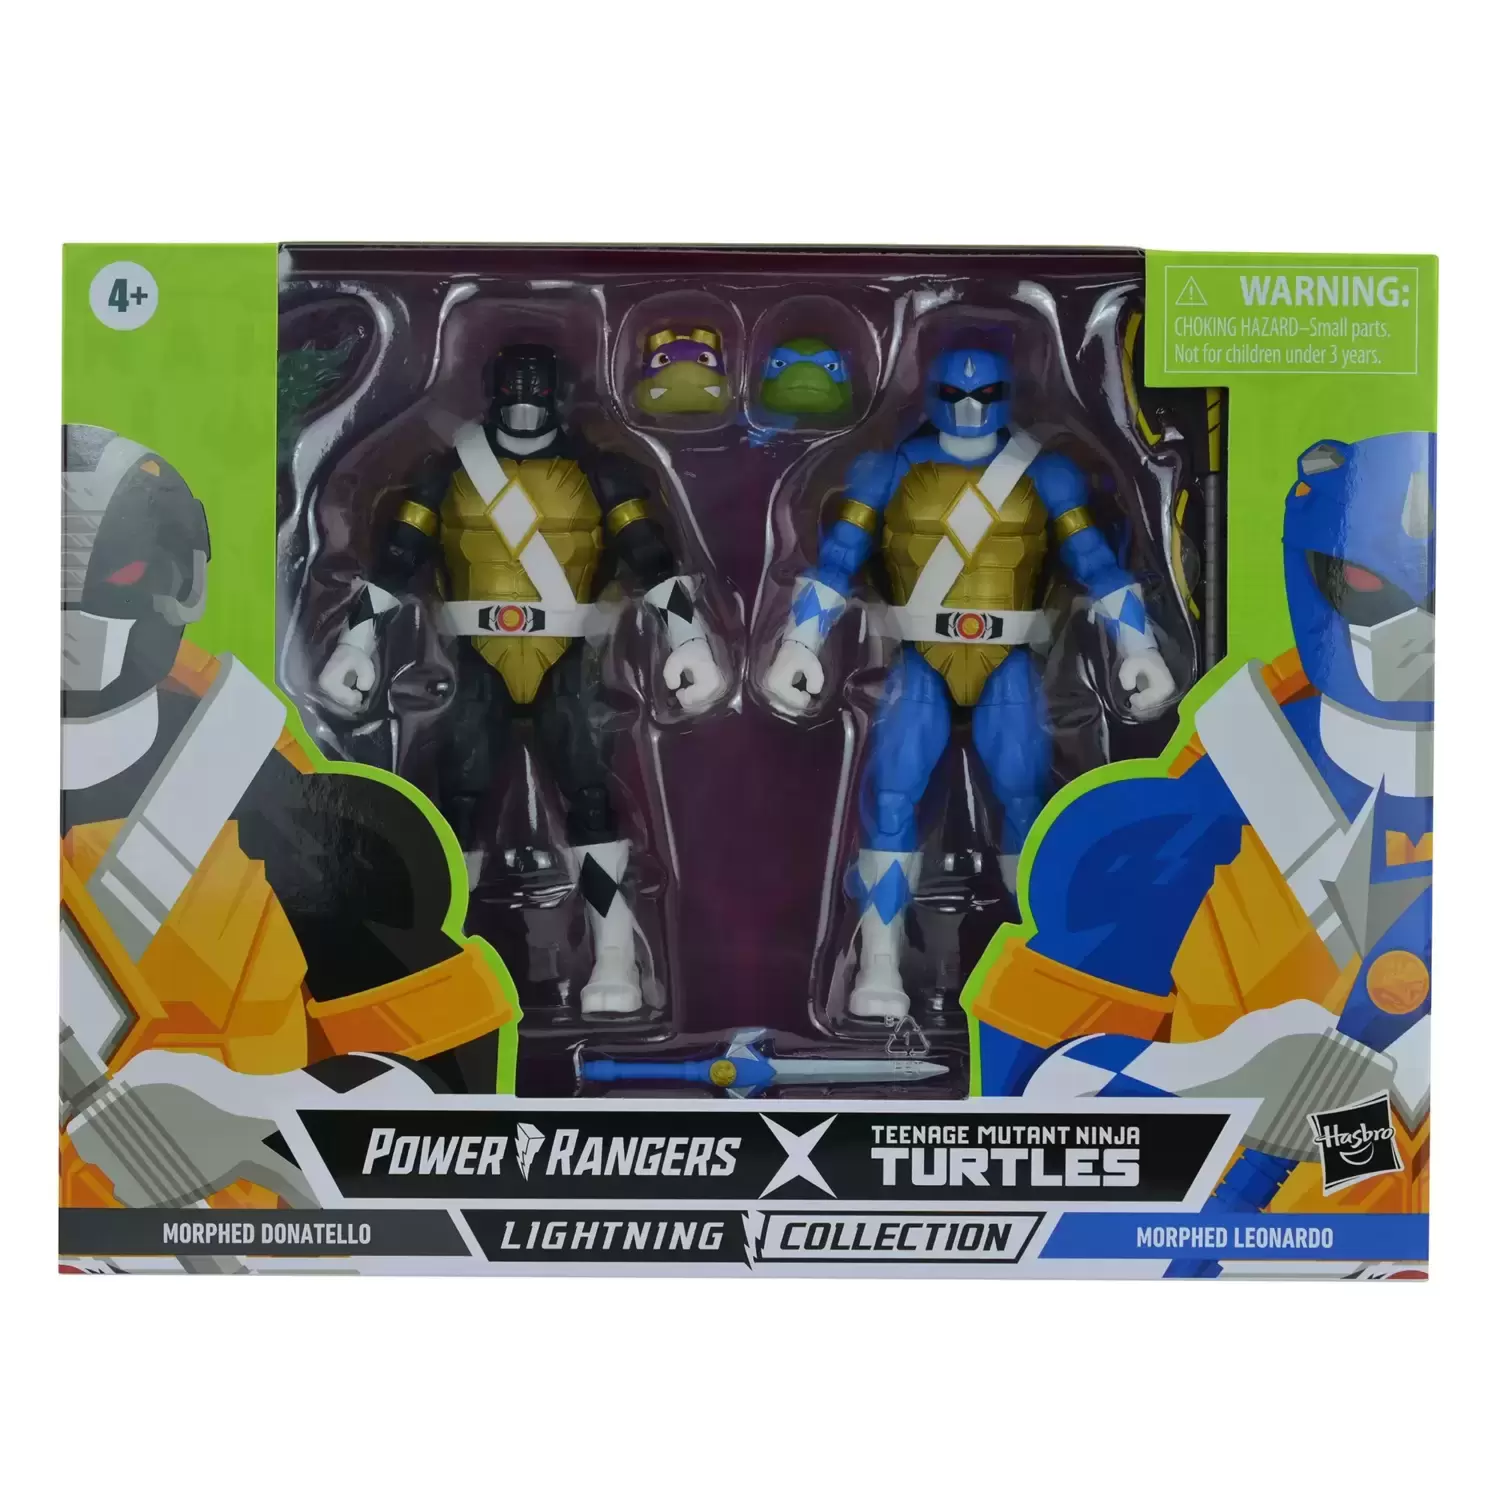 Power Rangers Hasbro - Lightning Collection - Power Rangers X TMNT - Morphed Donatello & Morphed Leonardo Action Figures 2 Pack